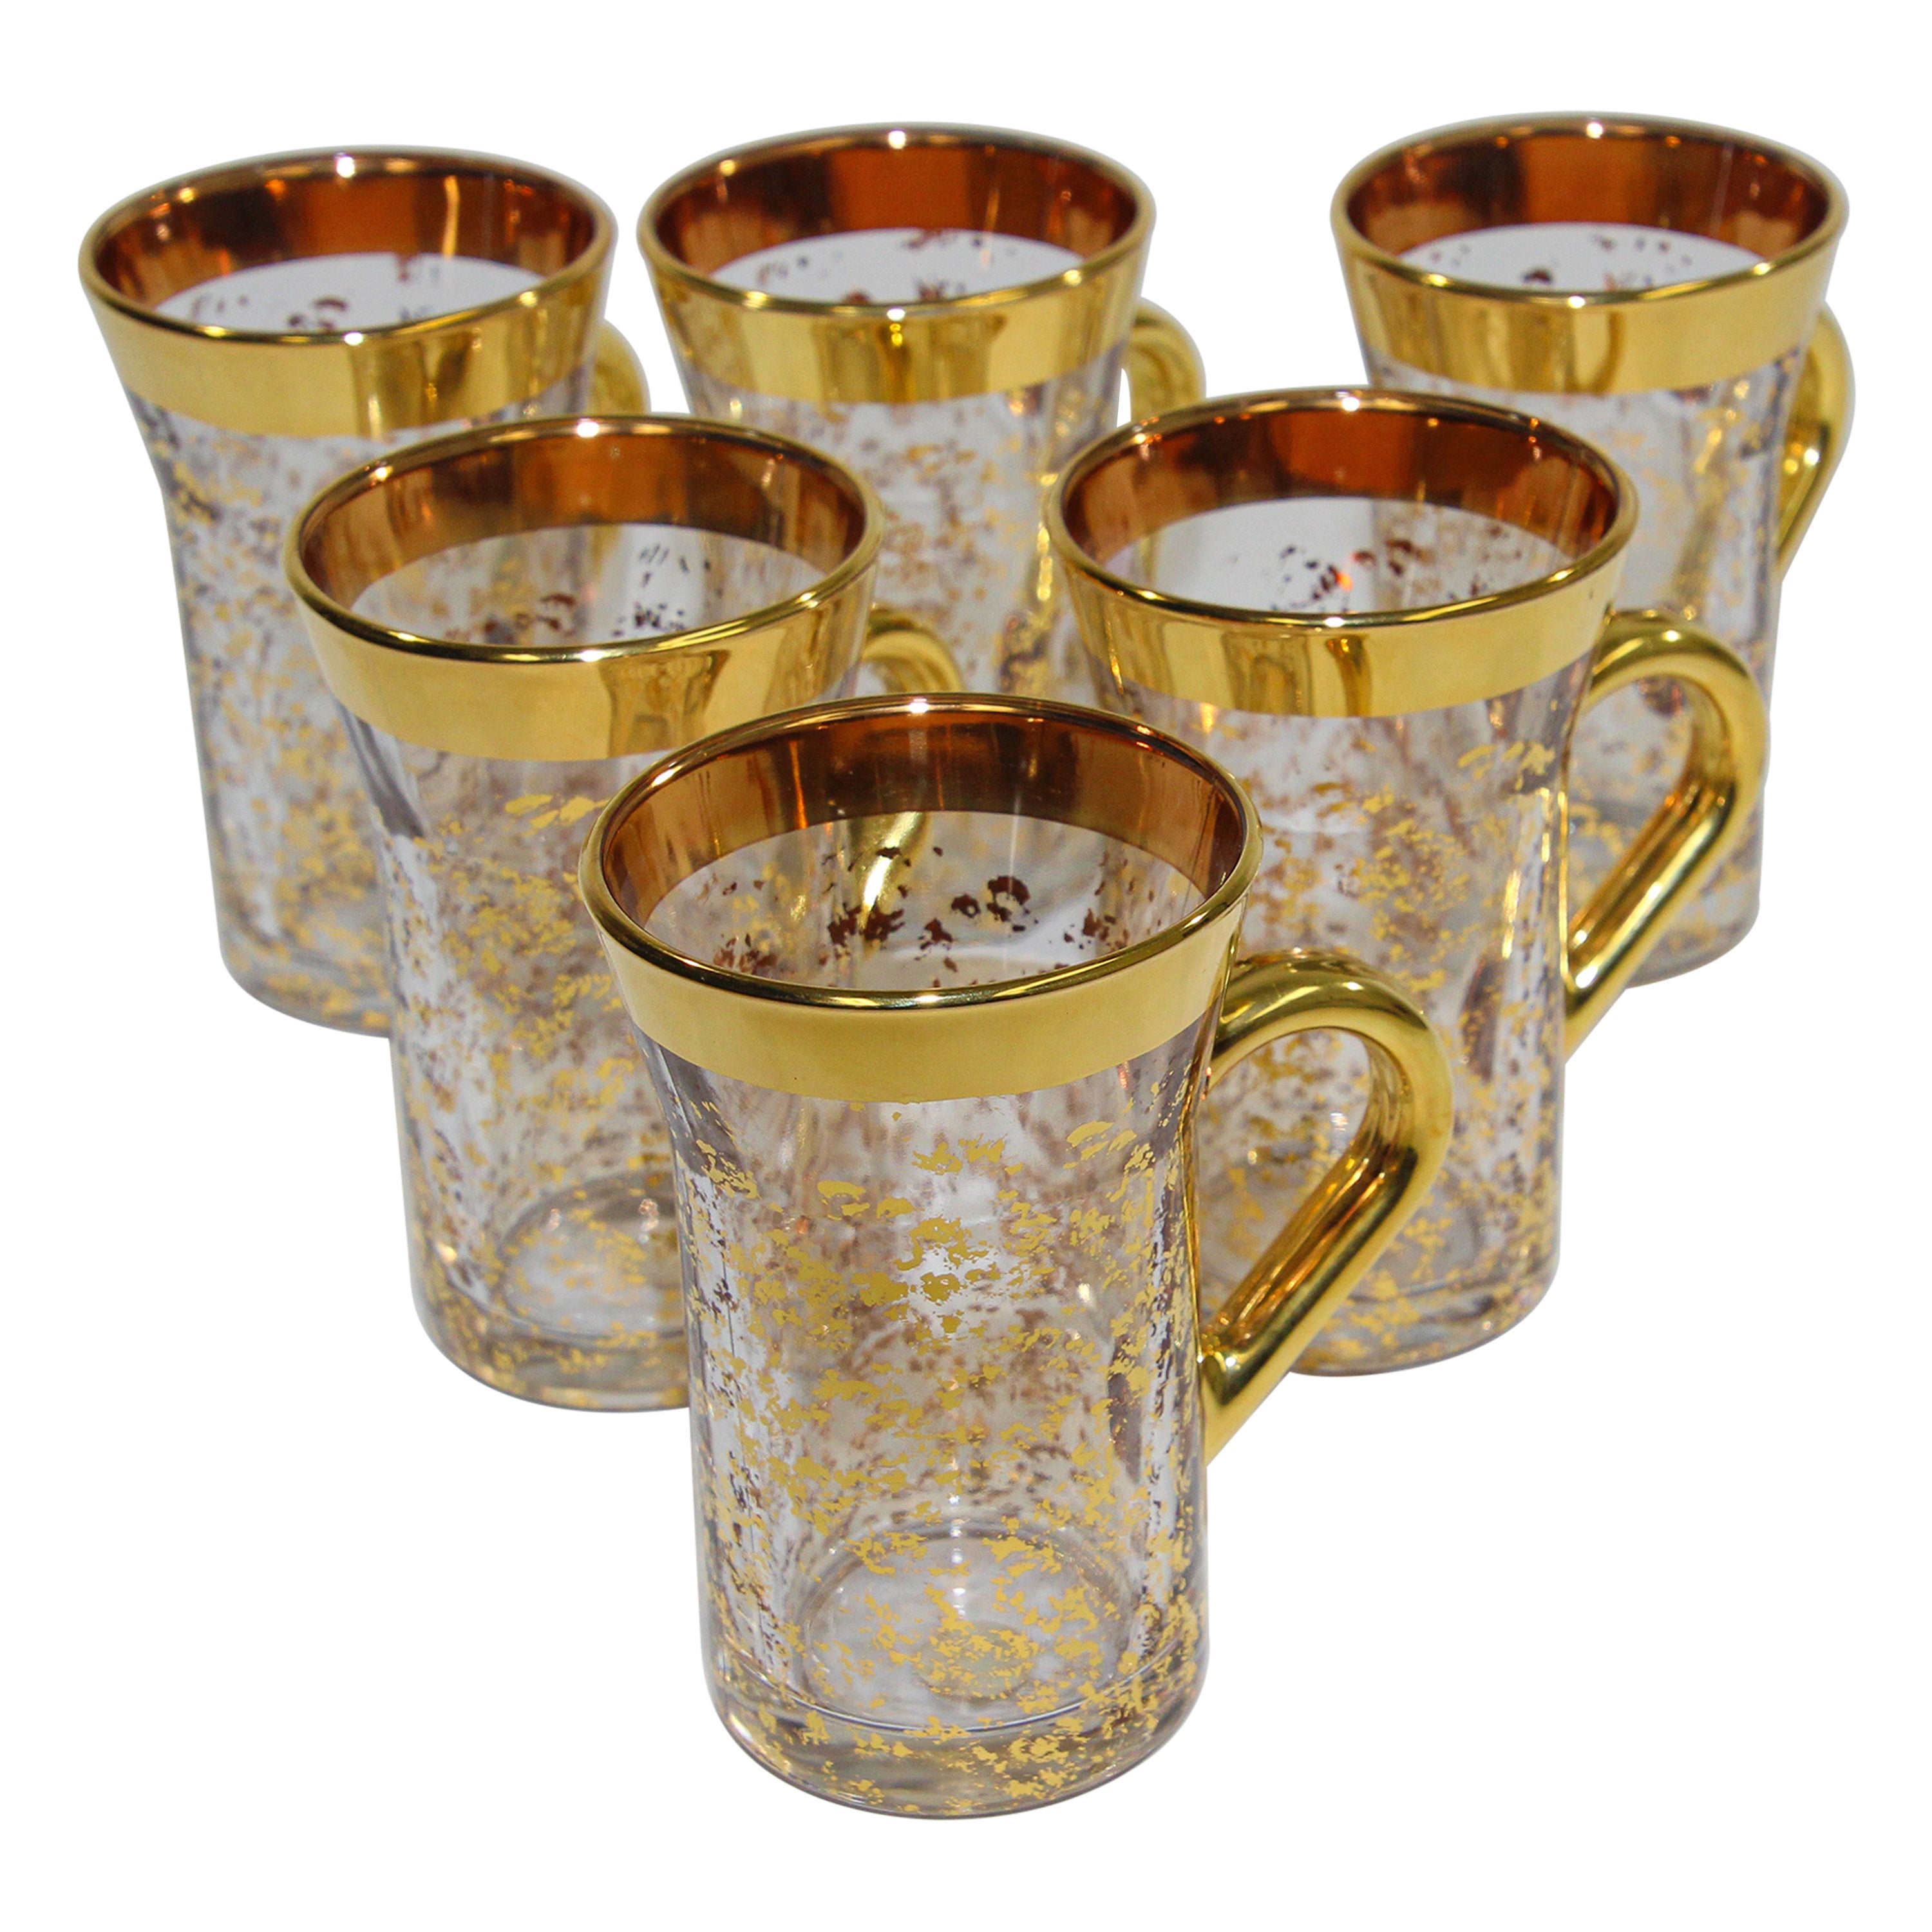 Vintage Lavorato a Mano Italian Handled Barware Glasses Set of 6